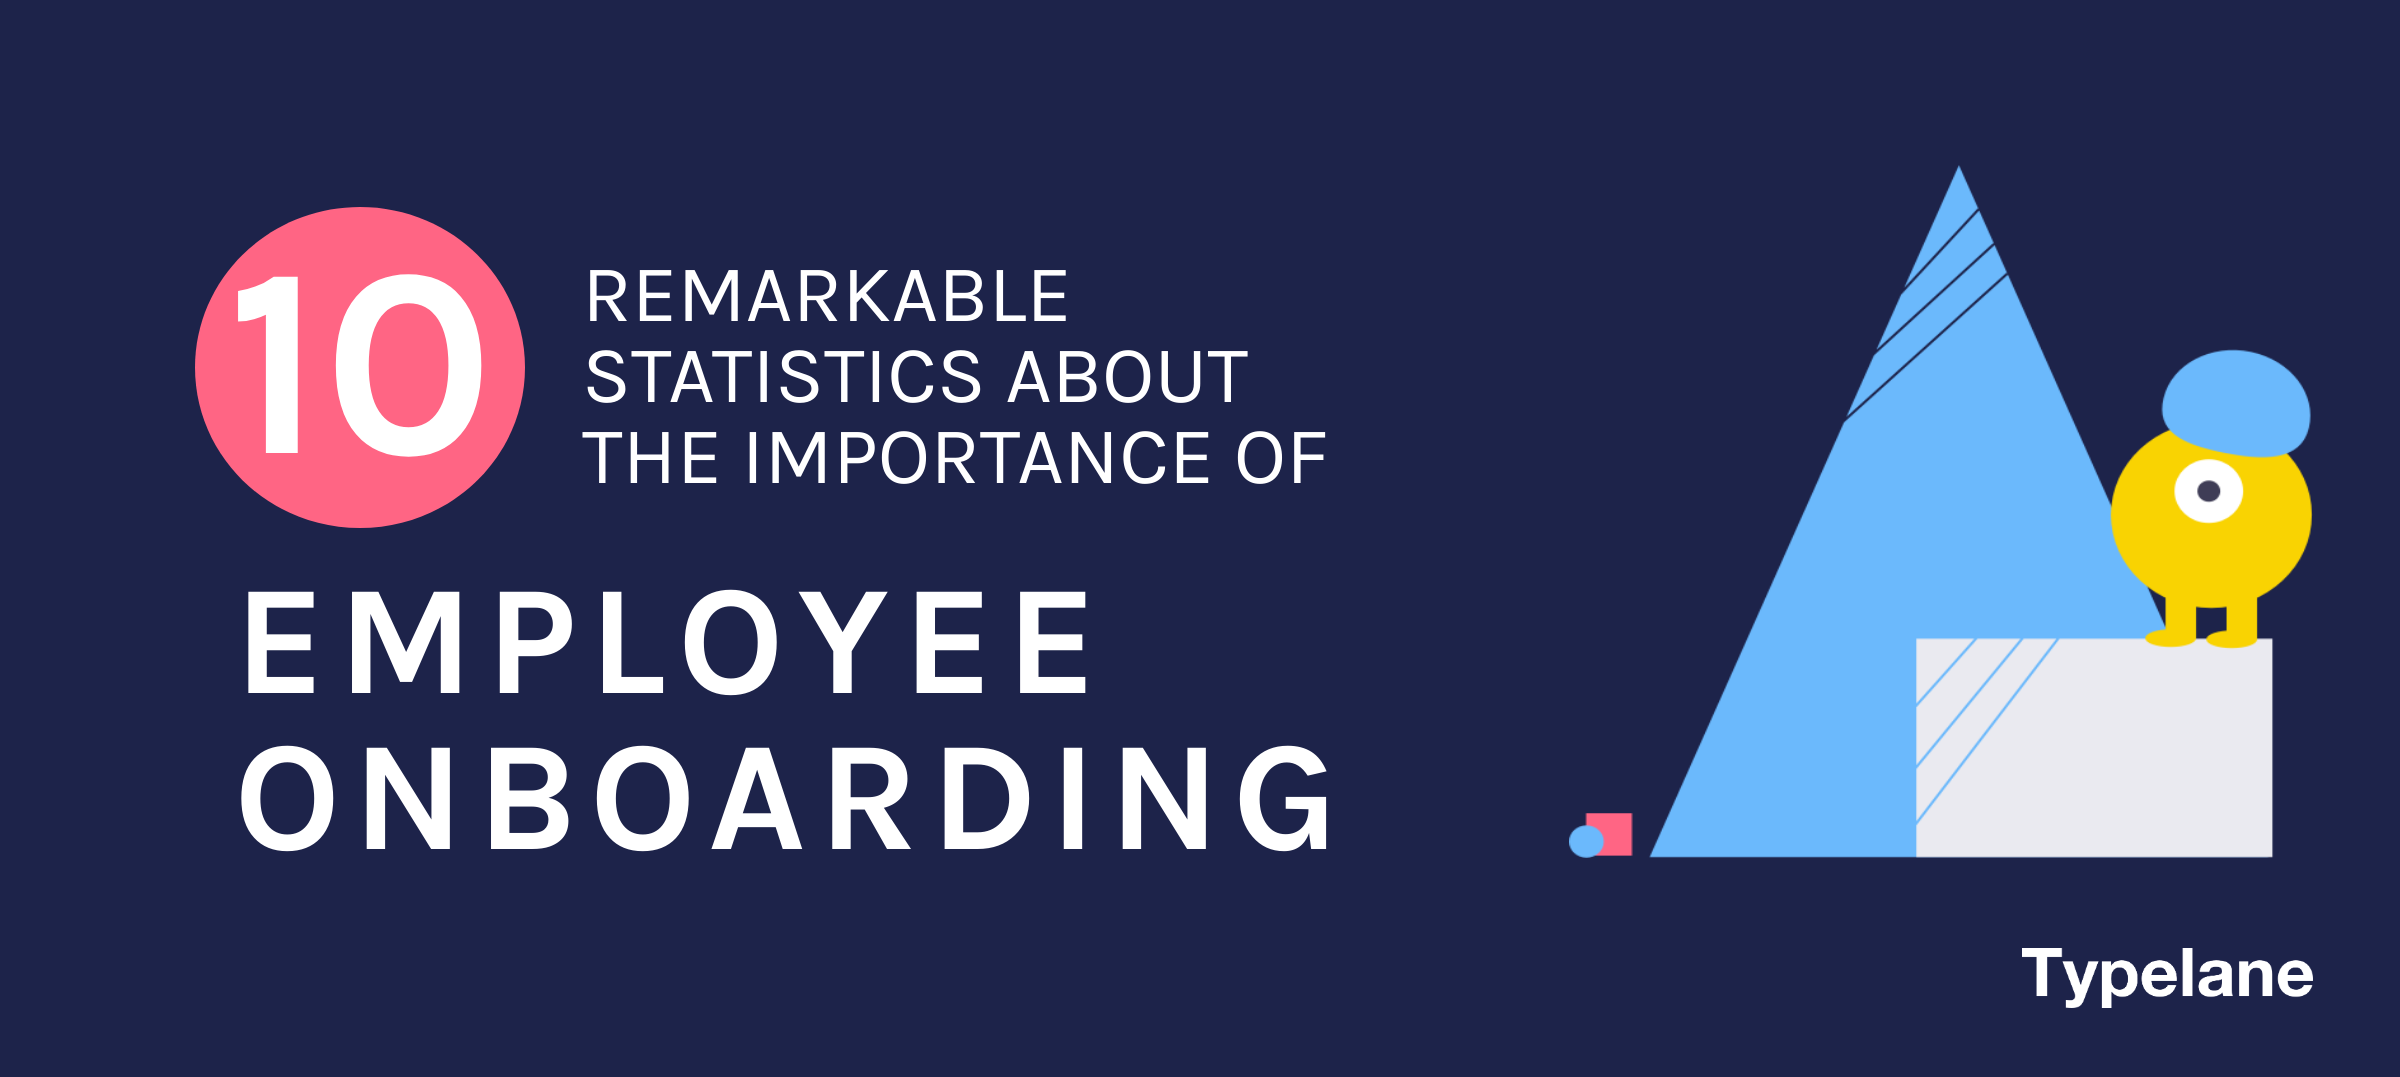 onboarding statistics